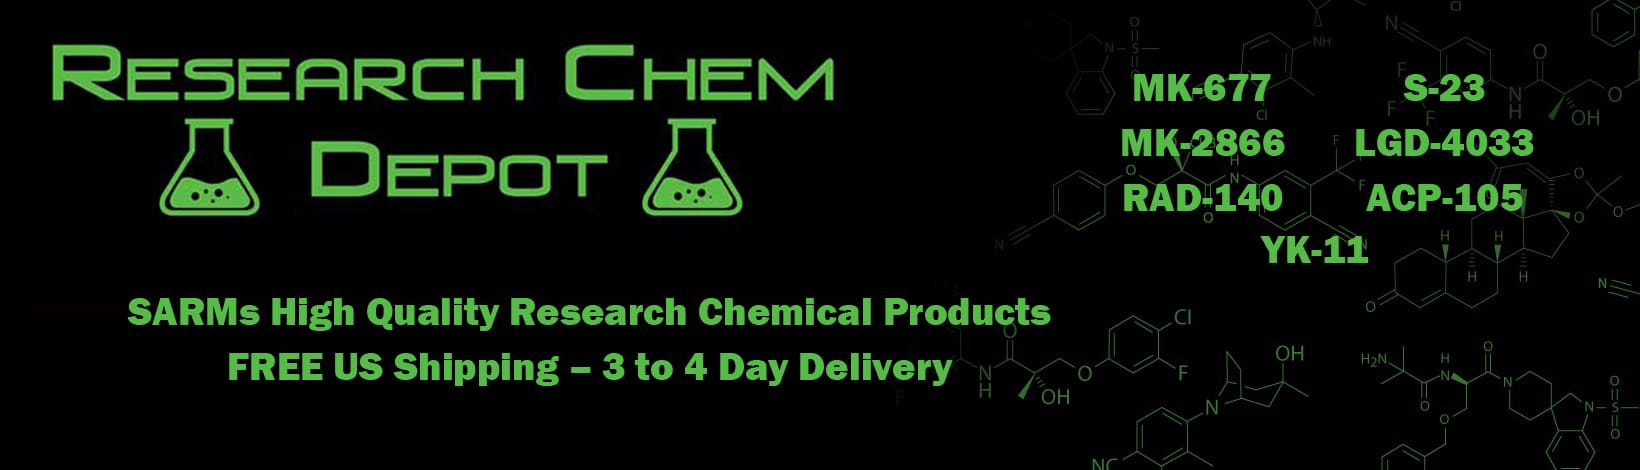 Research Chem Depot1640x470 1